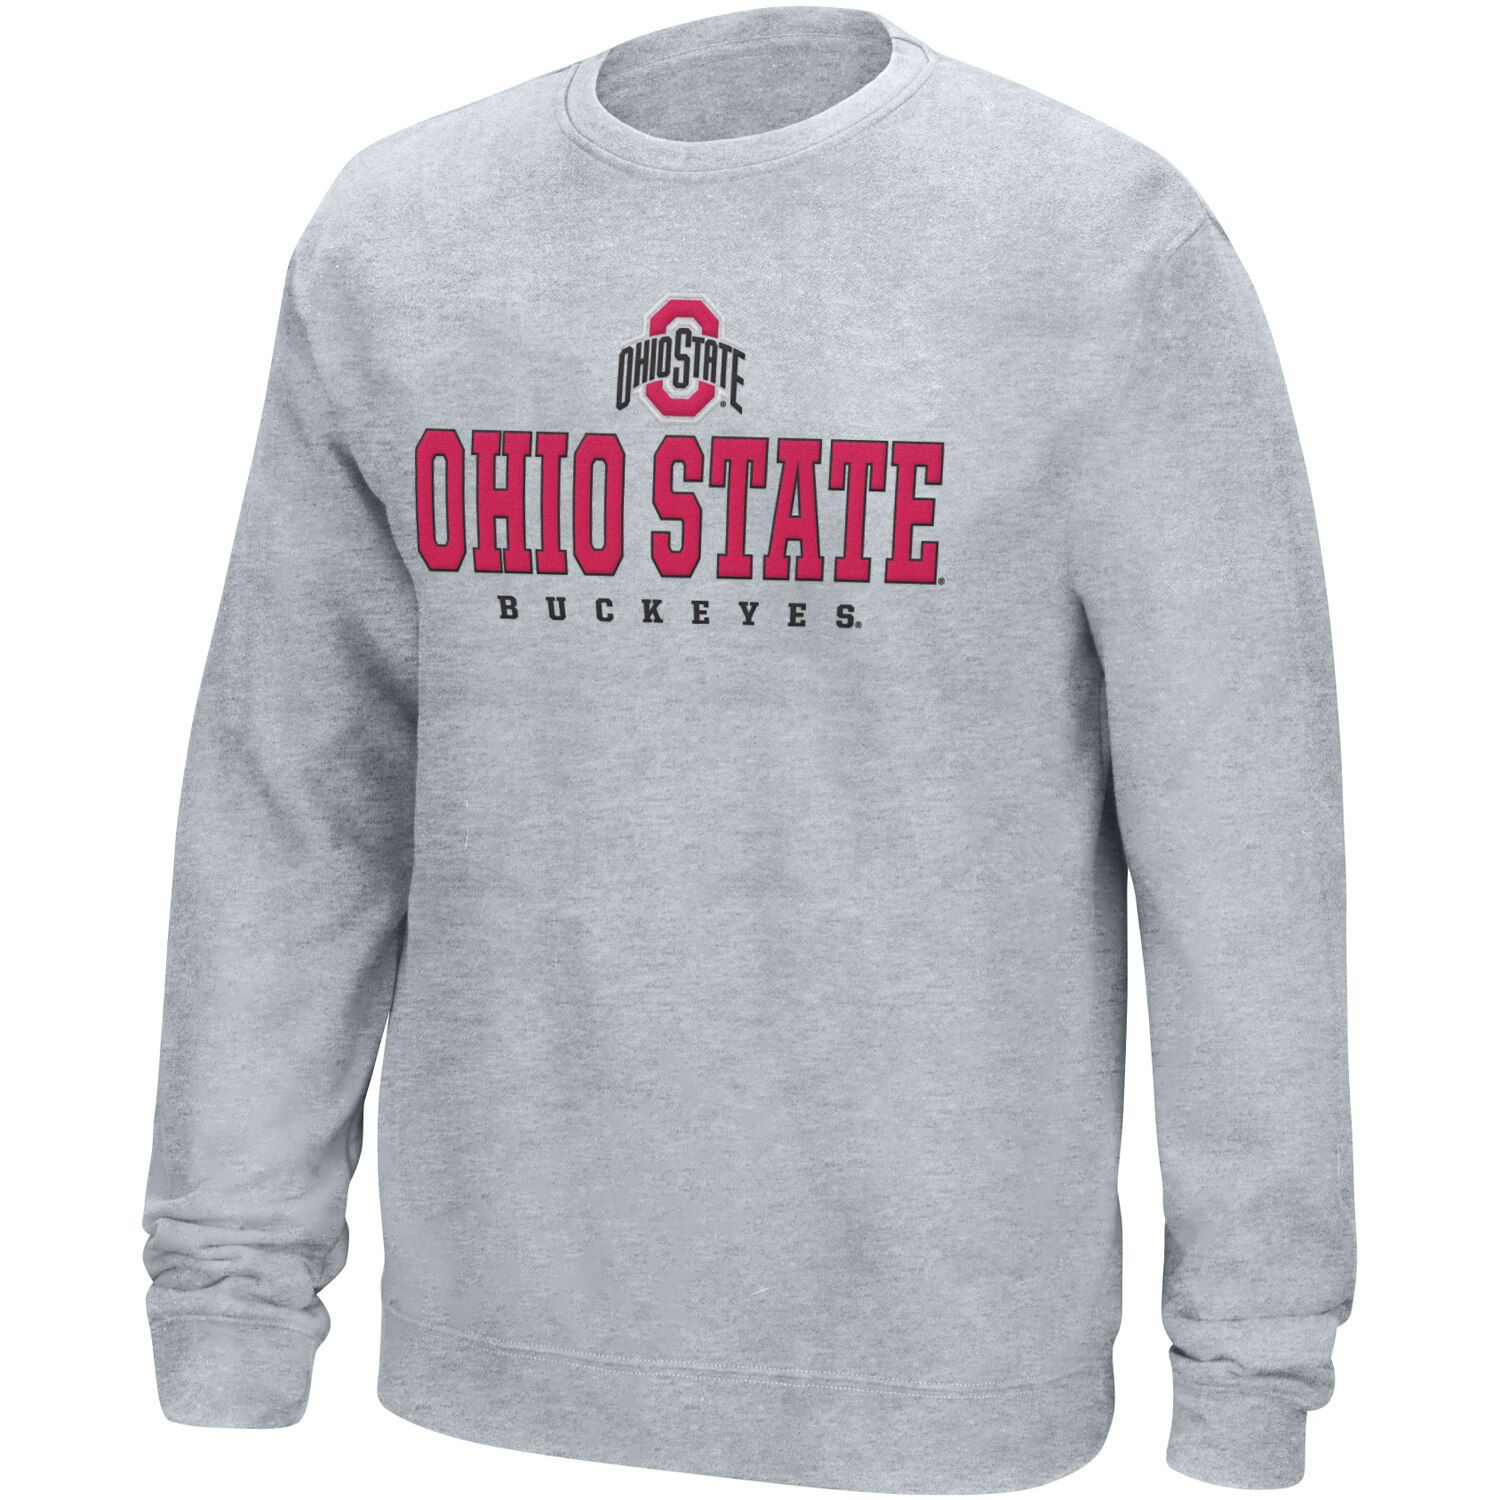 grey ohio state hoodie